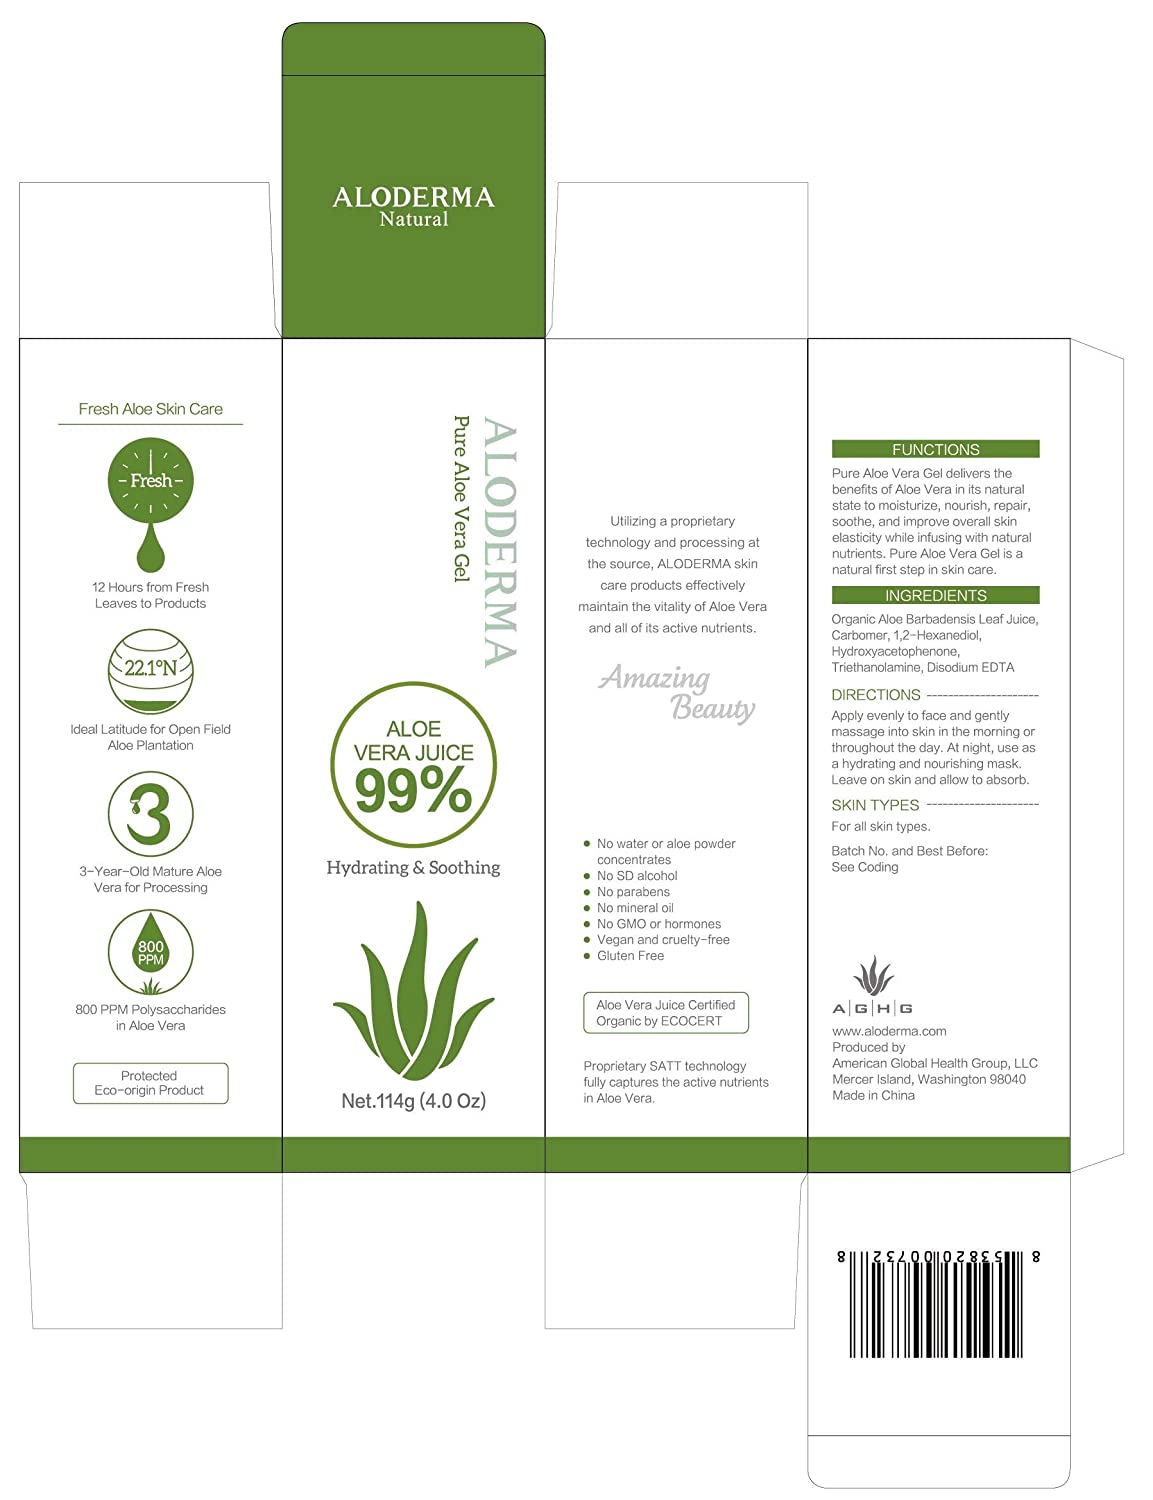 Aloderma Pure Aloe Vera Gel - 114g by AloeCure